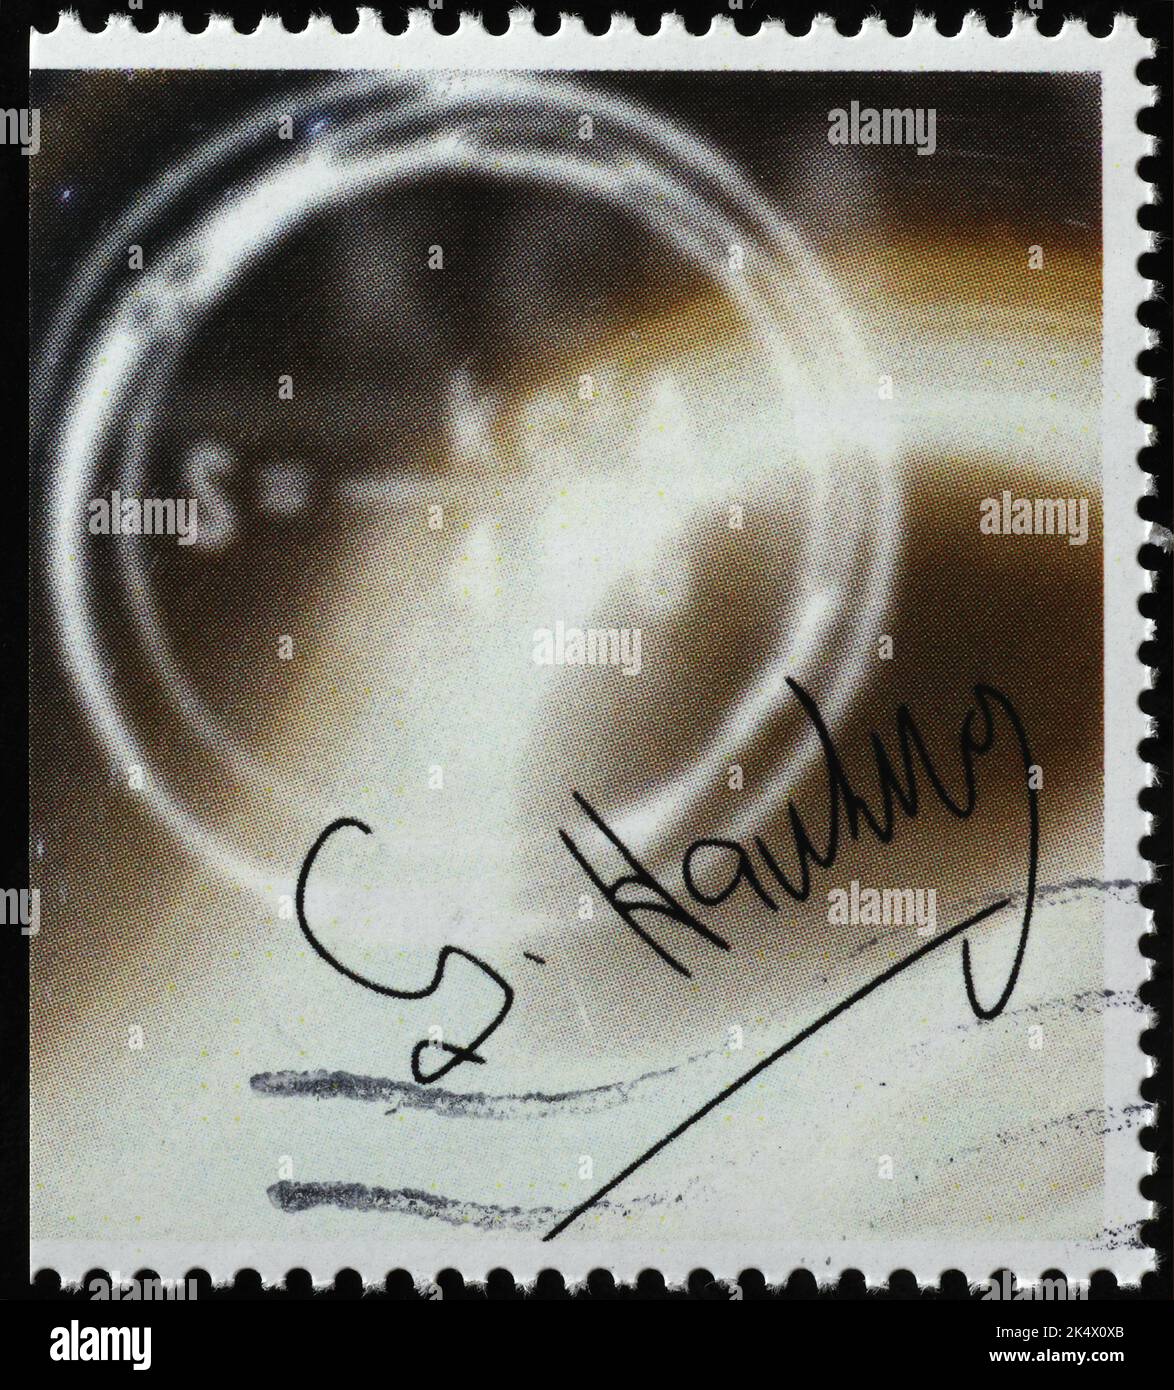 Signature of Stephen Hawking on postage stamp Stock Photo